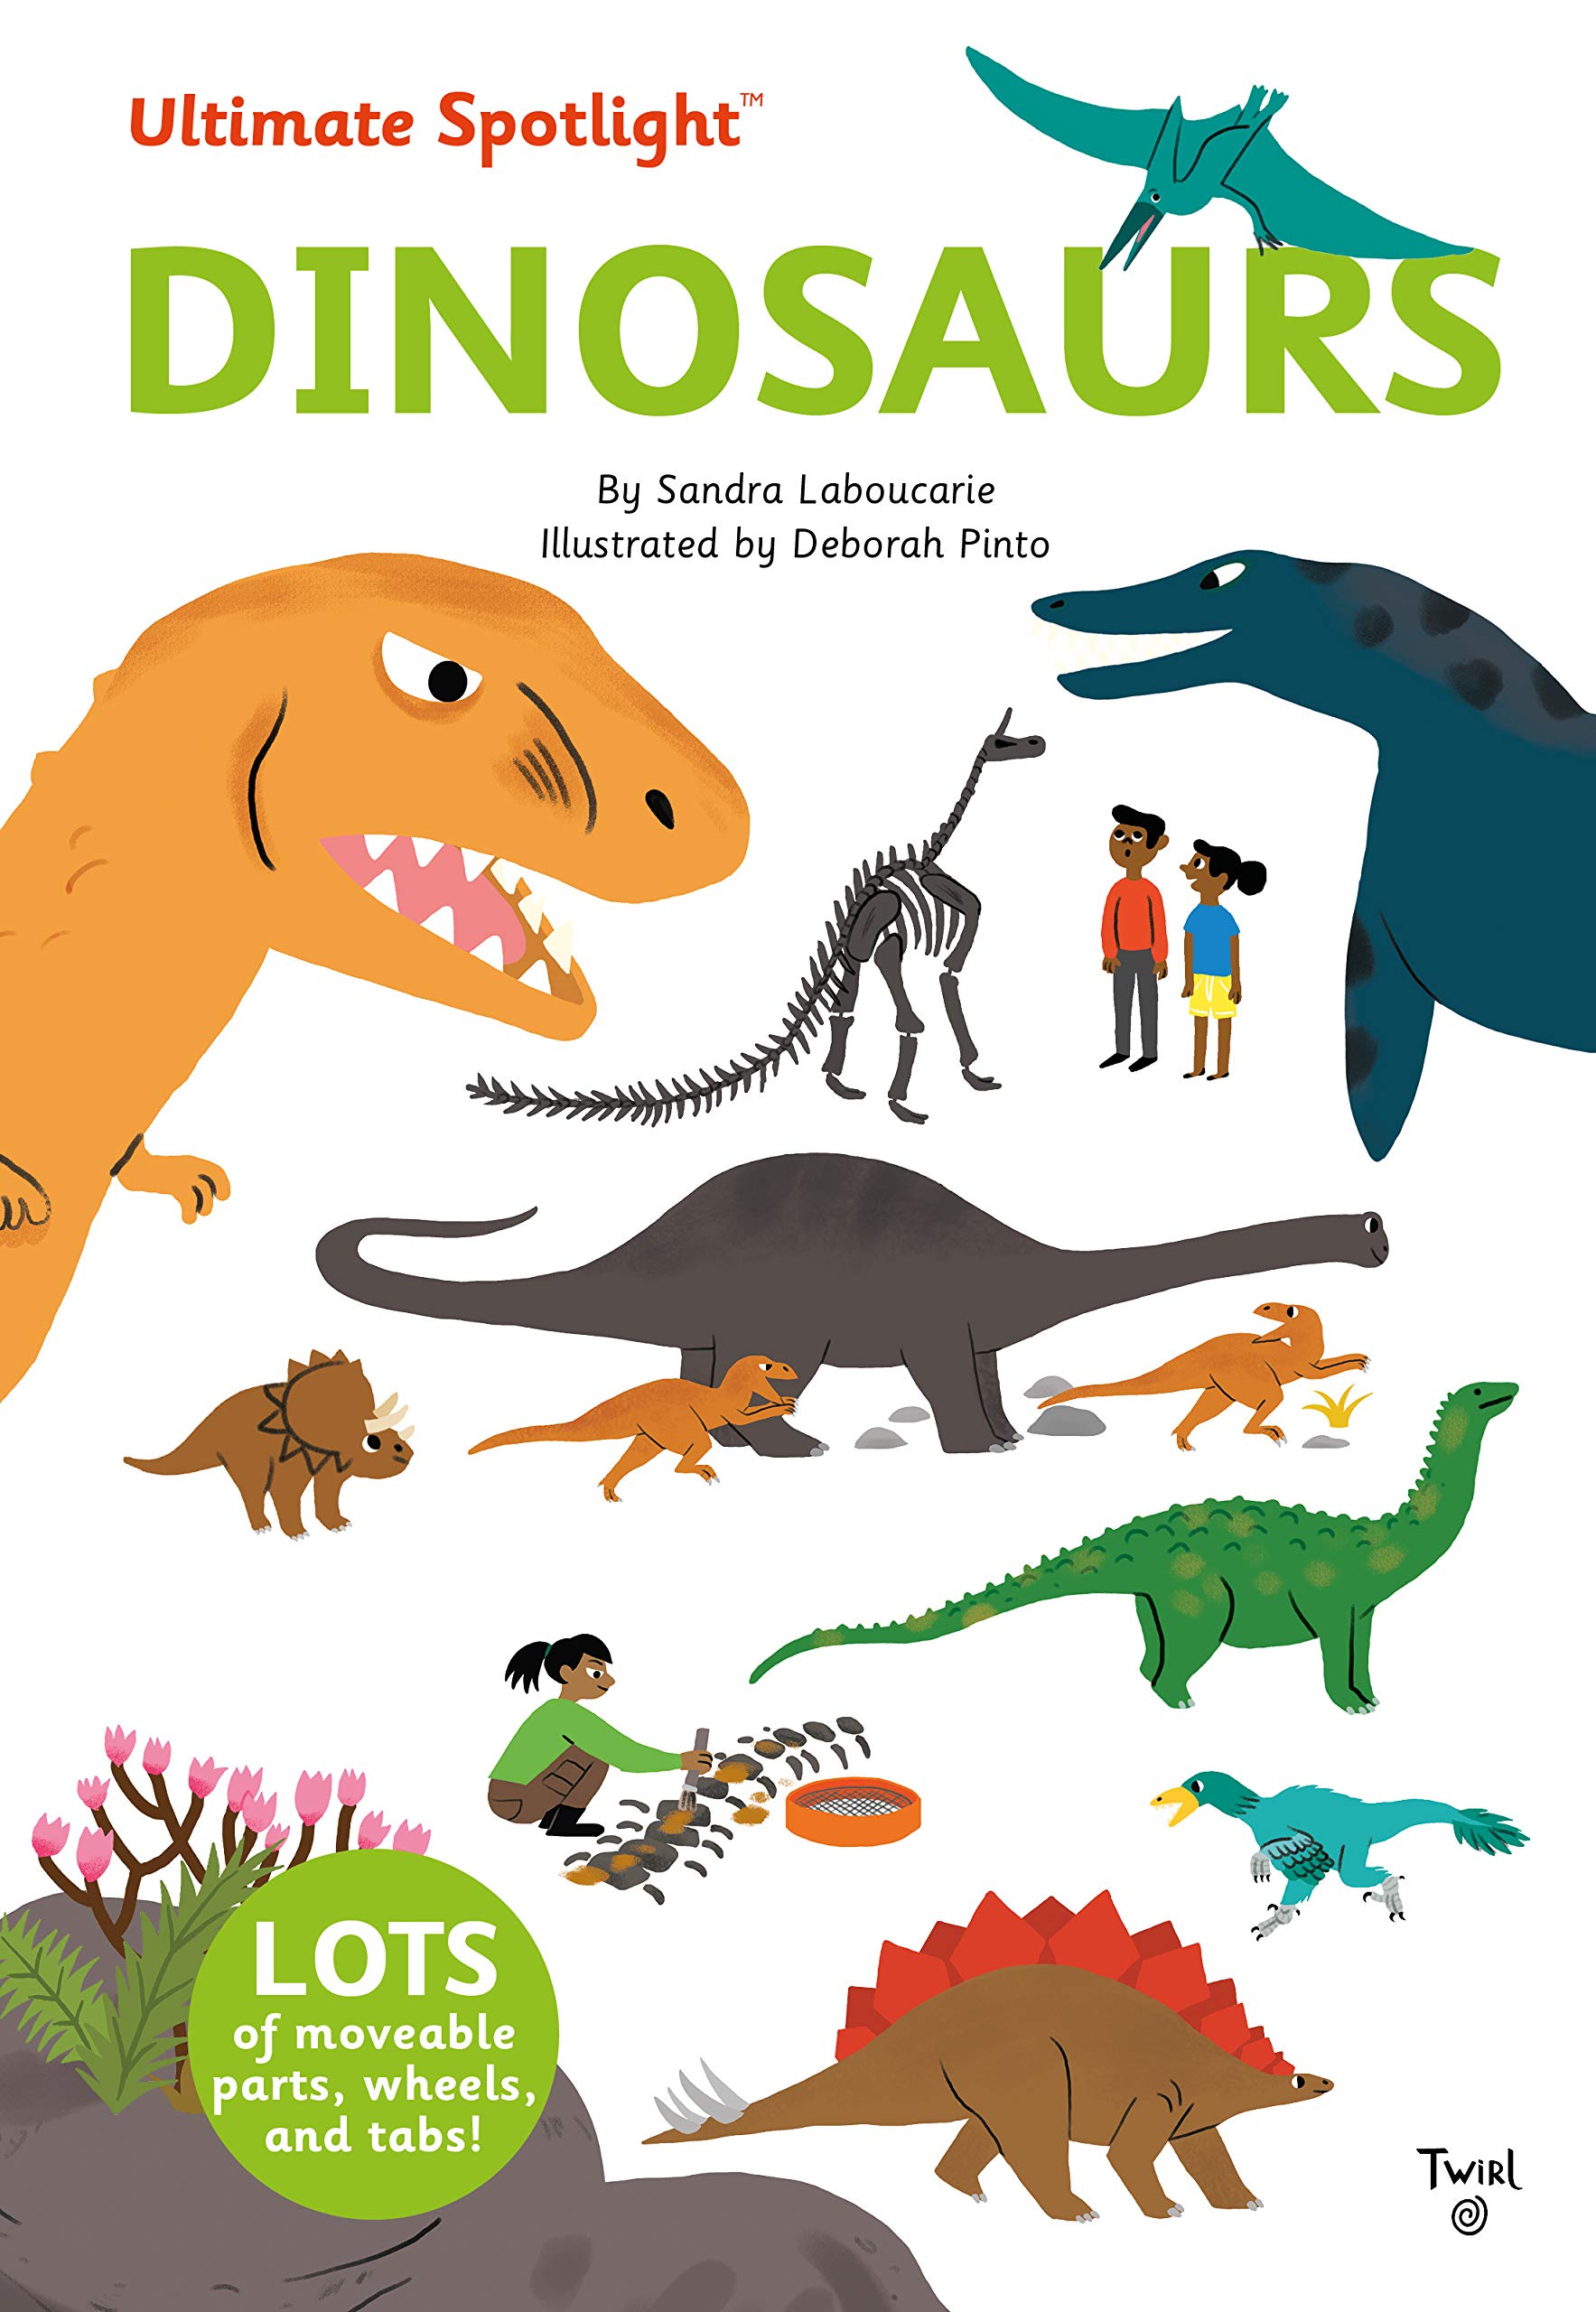 Ultimate Spotlight: Dinosaurs - Sandra Laboucarie and Deborah Pinto